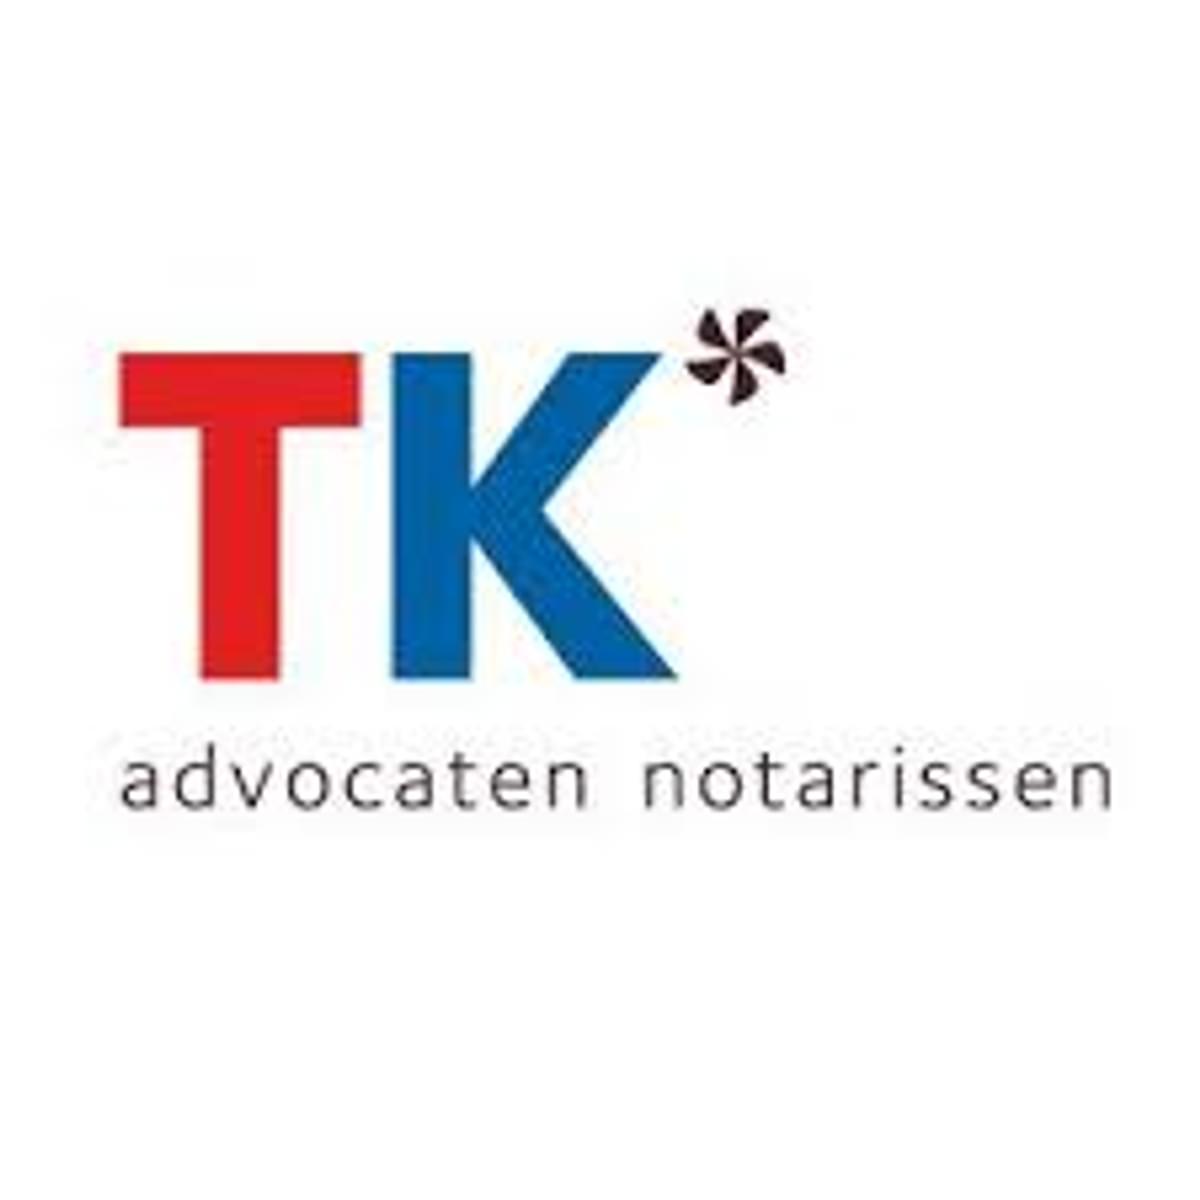 TeekensKarstens opent tech office in Amsterdam image